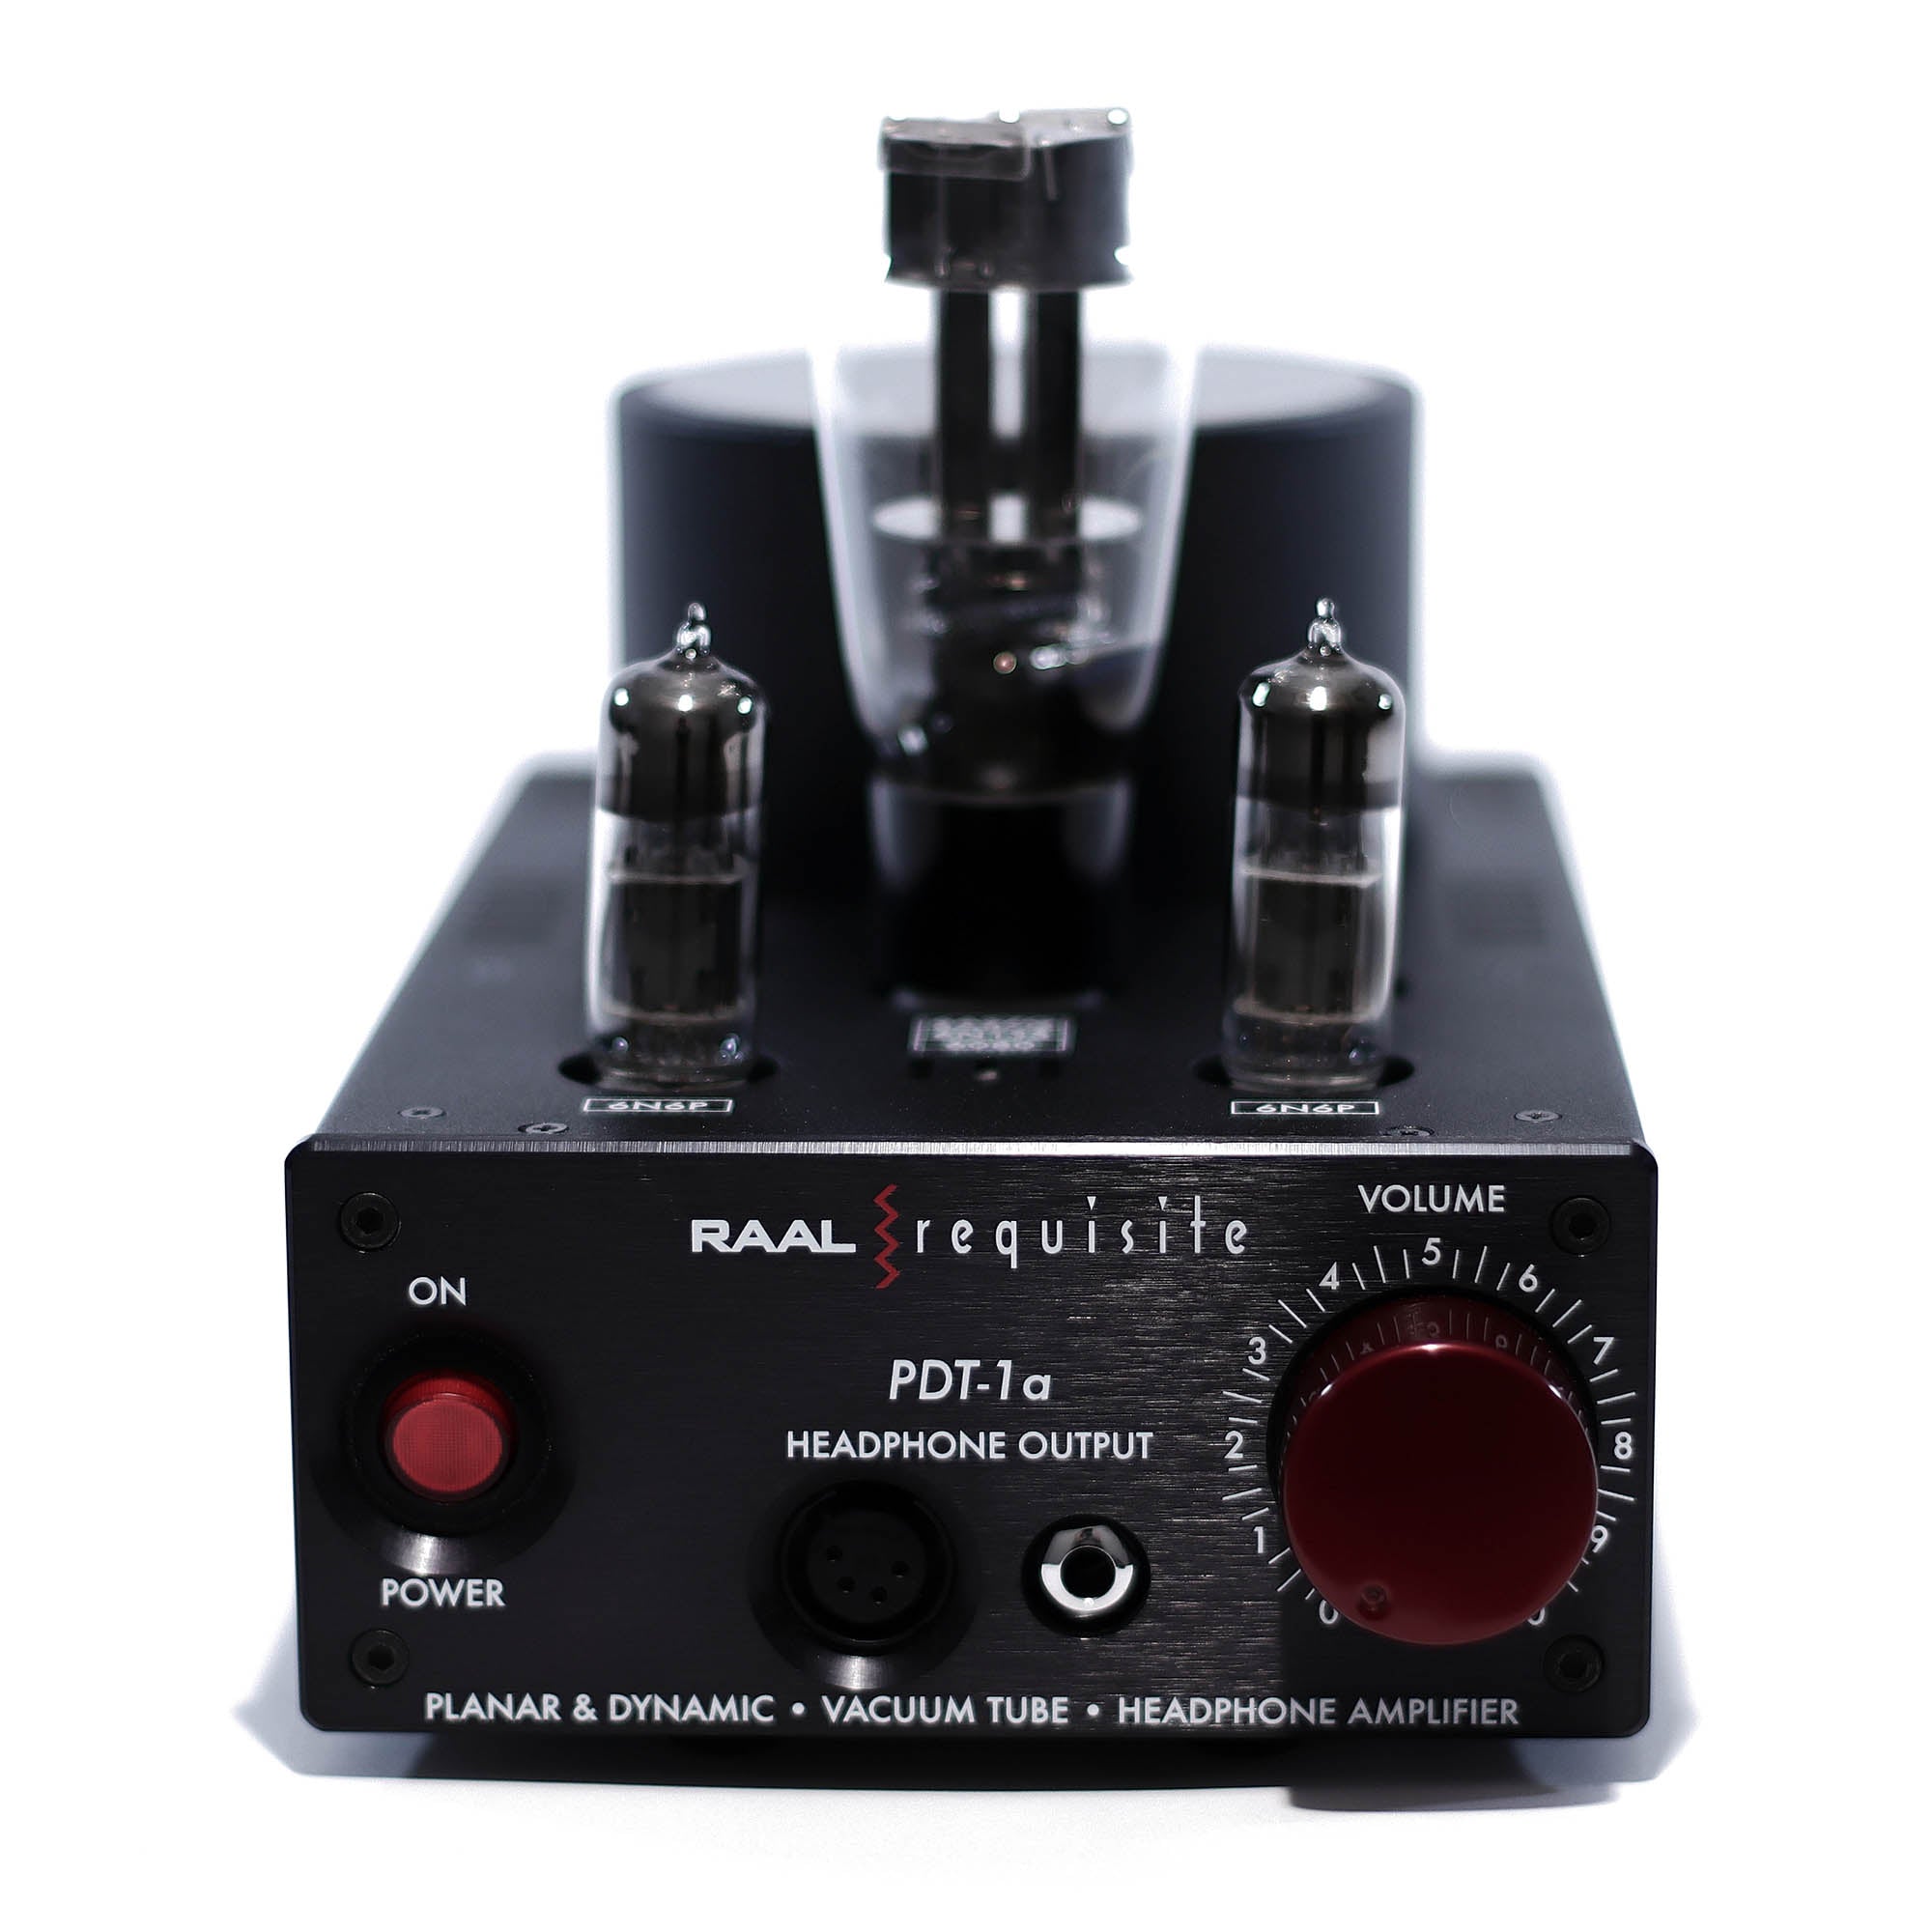 RAAL-requisite PDT-1a Tube Headphone Amplifier